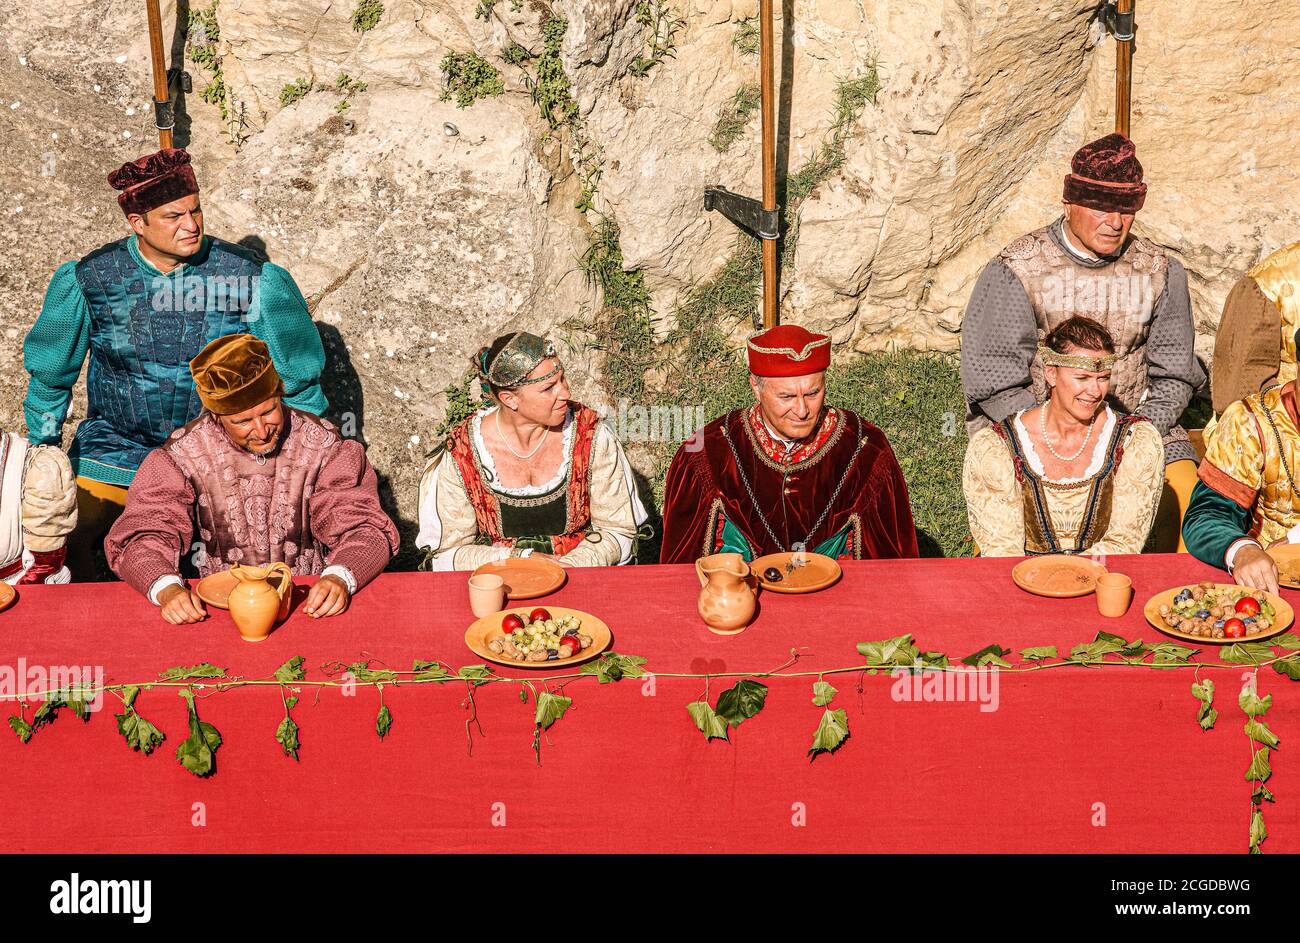 Republic of San Marino - Festa Del Santo - Cava dei Balestrieri - Medieval banquet Stock Photo